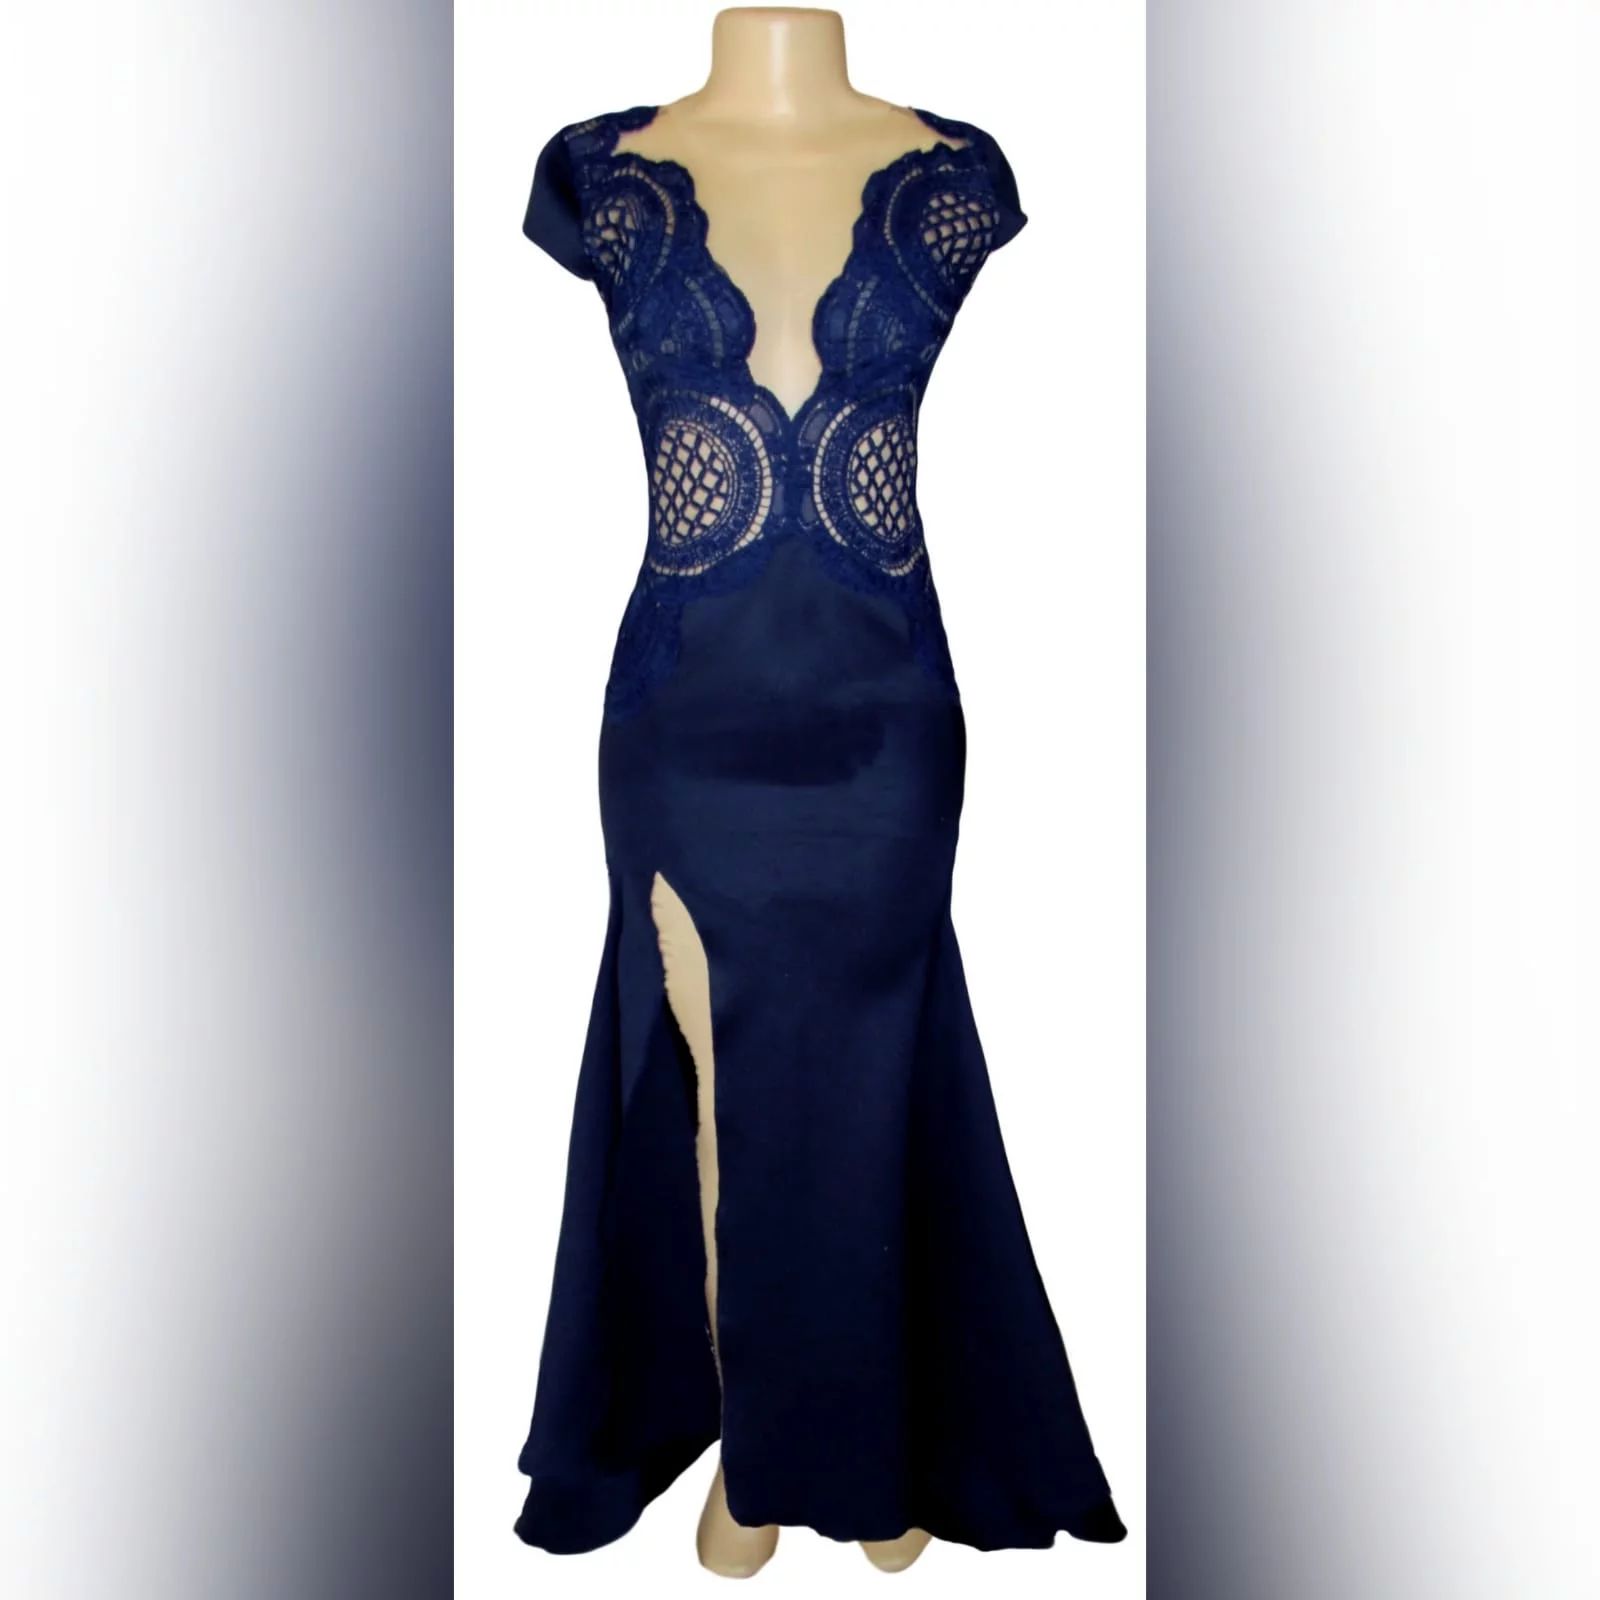 Navy blue long flowy dress with lace bodice 4 navy blue long flowy dress with lace bodice, v neckline & low v open back with a slit.